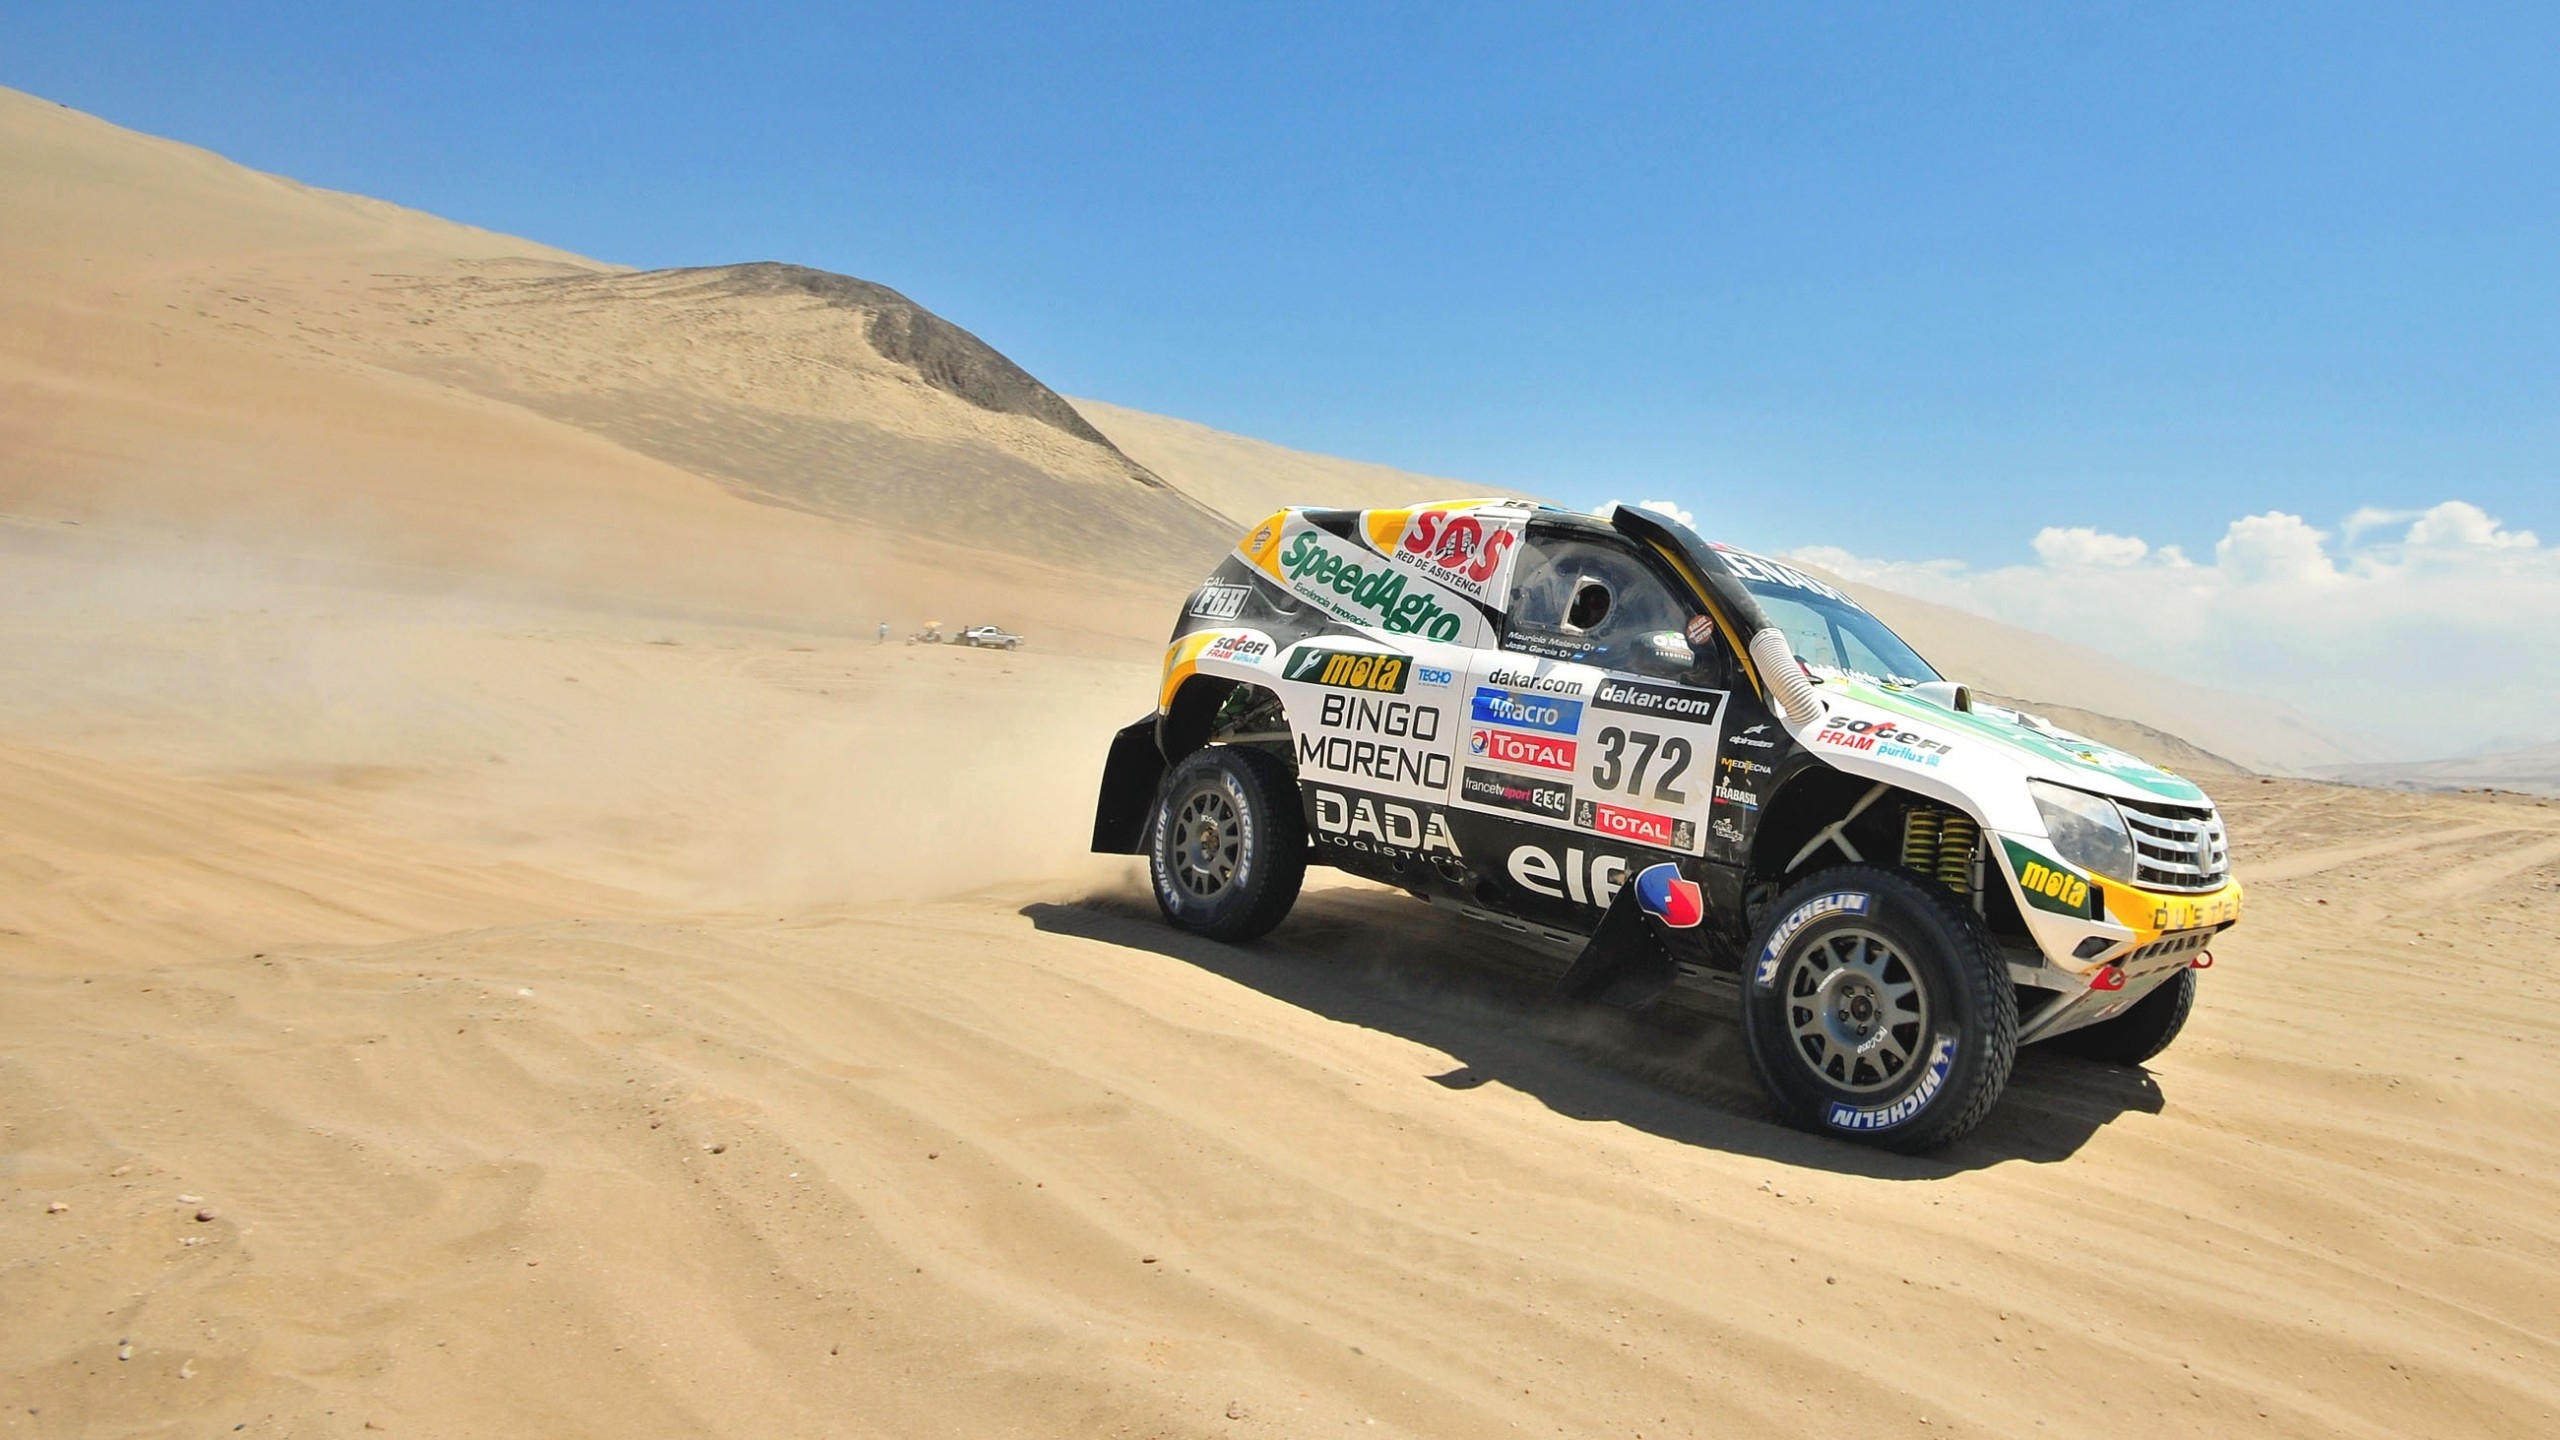 Renault Rally Dakar for 2560x1440 HDTV resolution